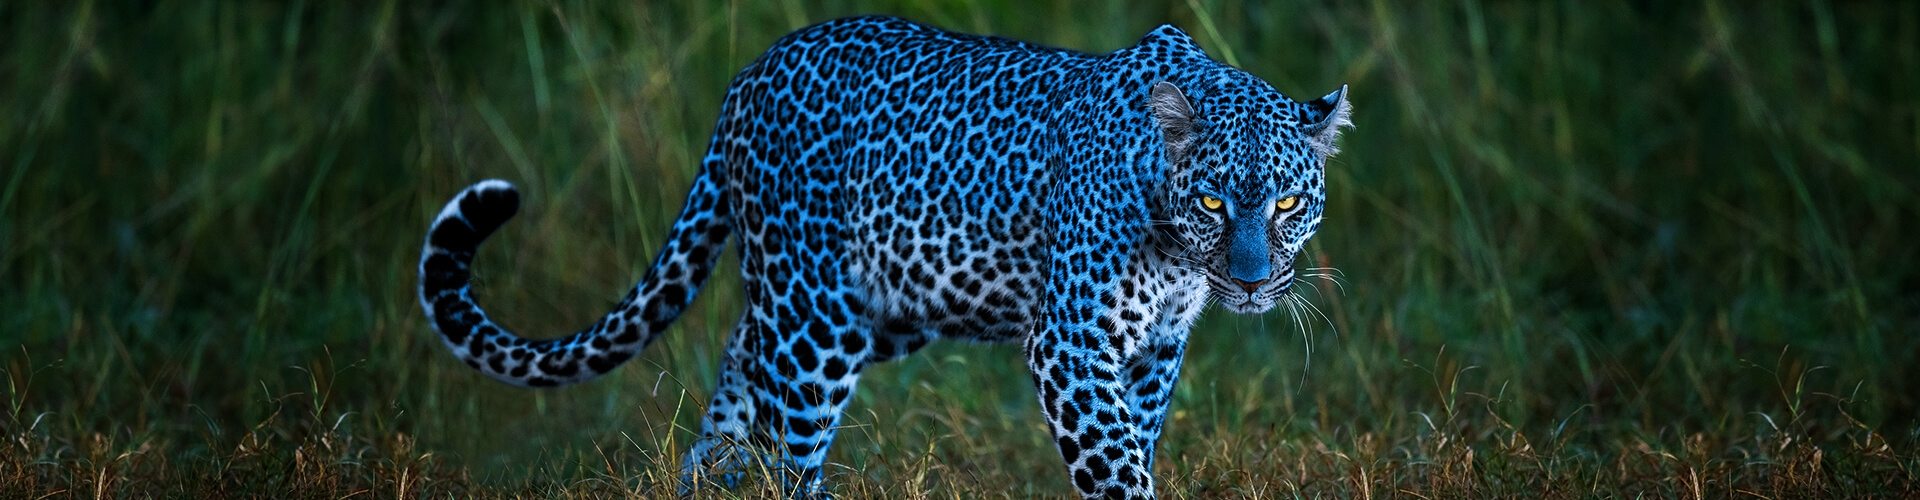 1920x500_top_banner_leopard.jpg